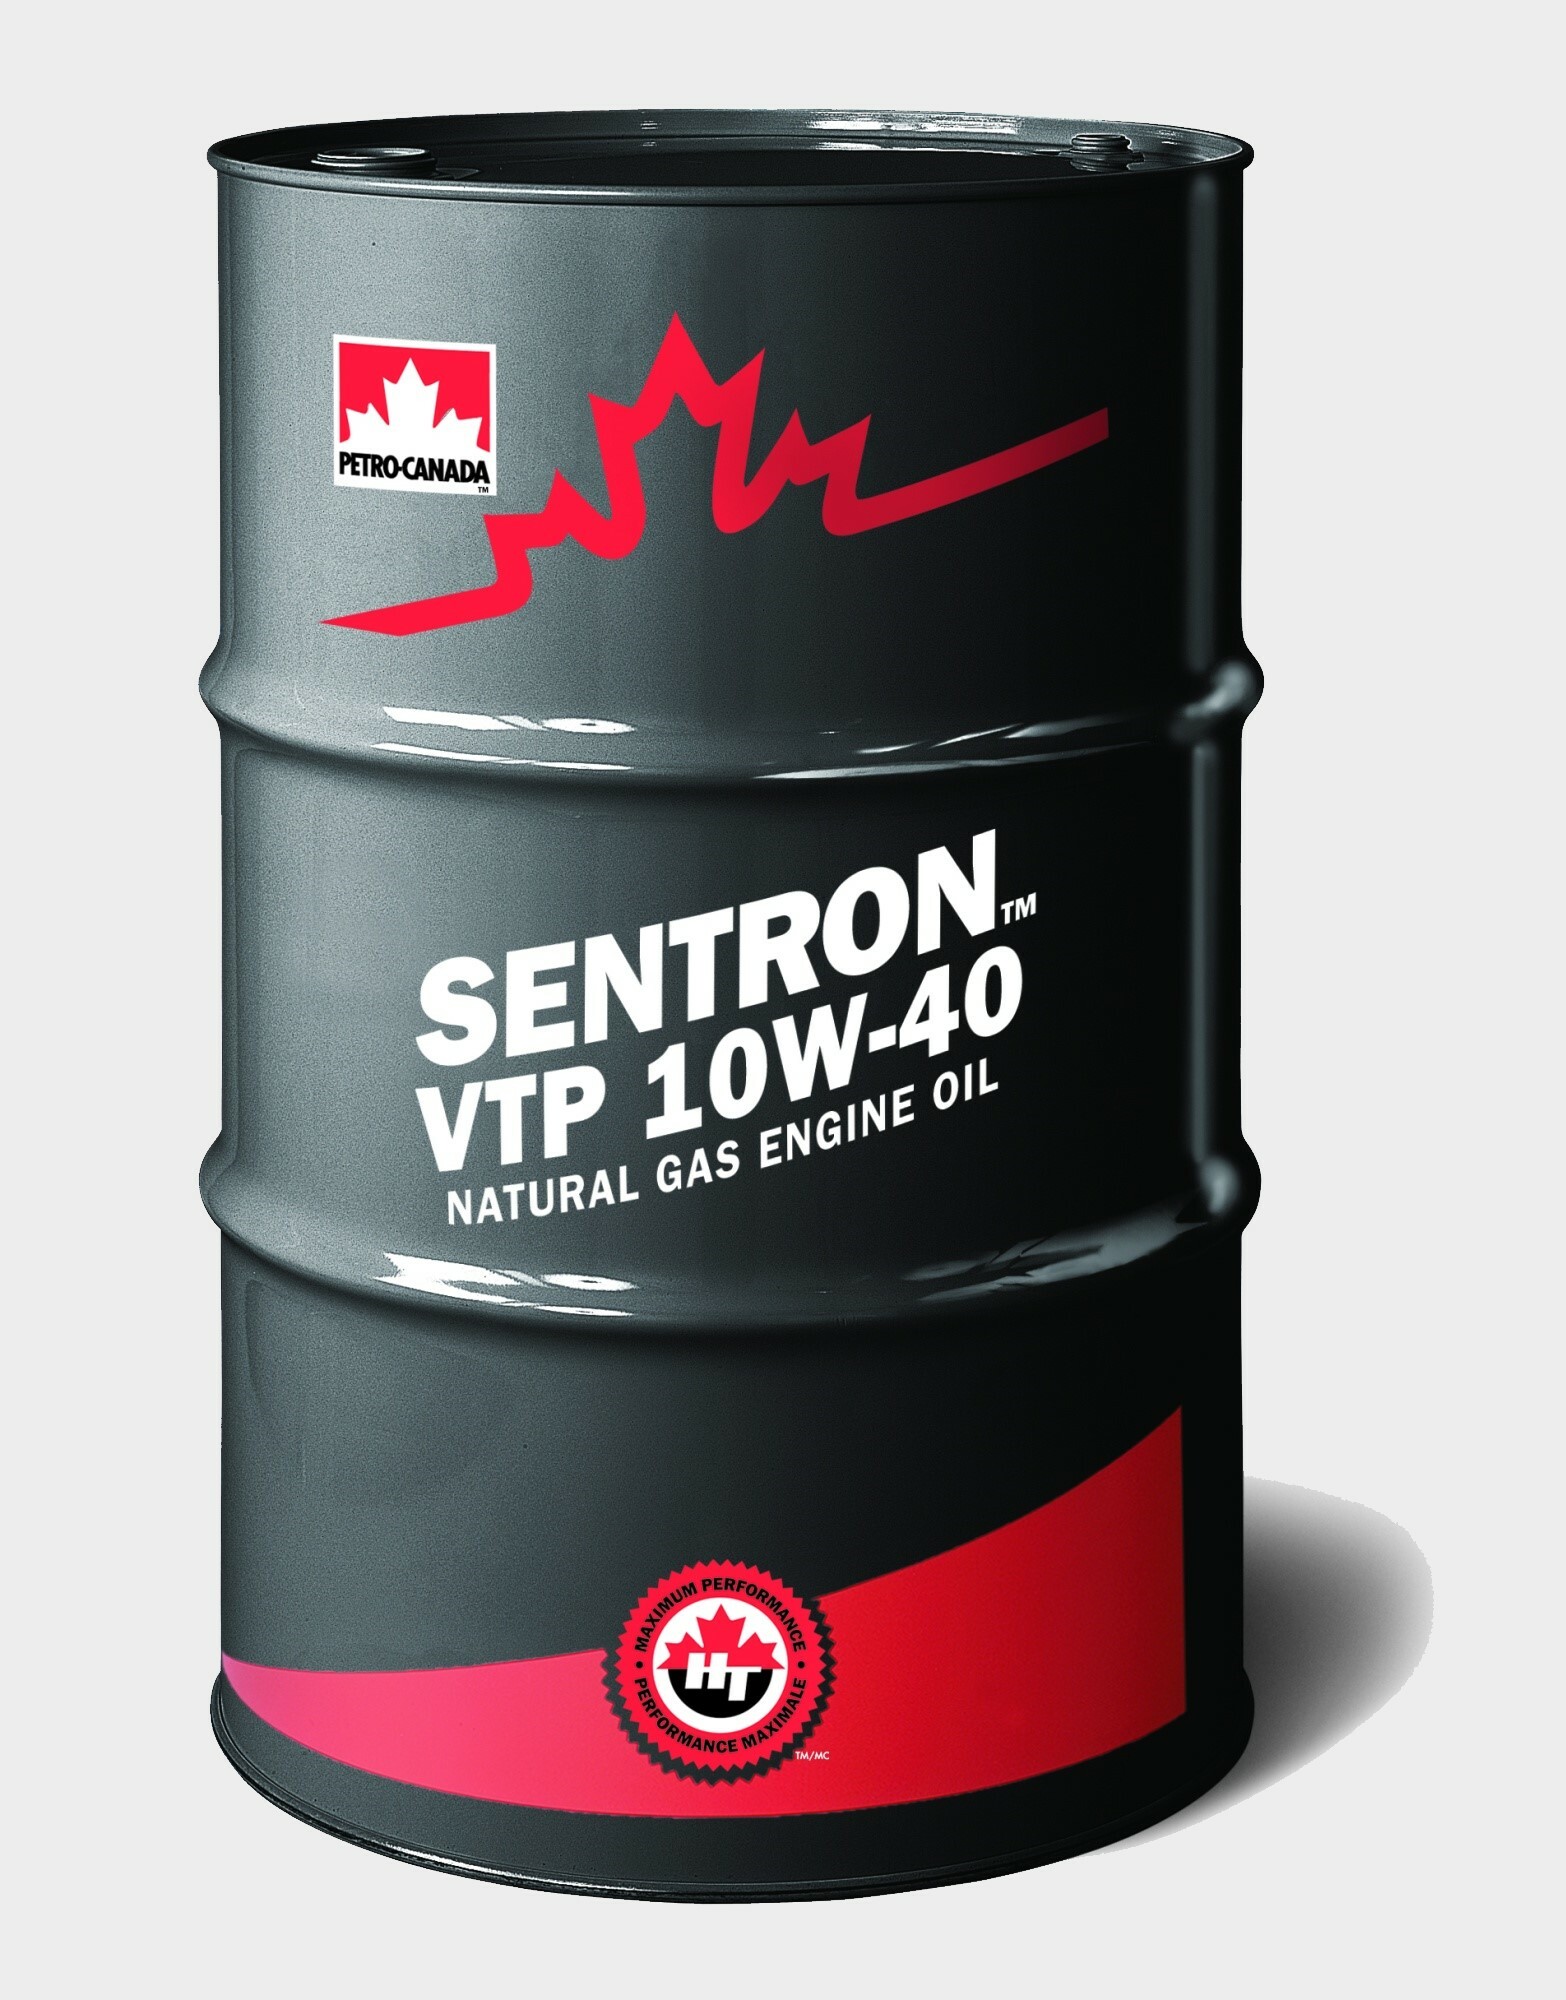 PETRO-CANADA SENTRON VTP 10W-40